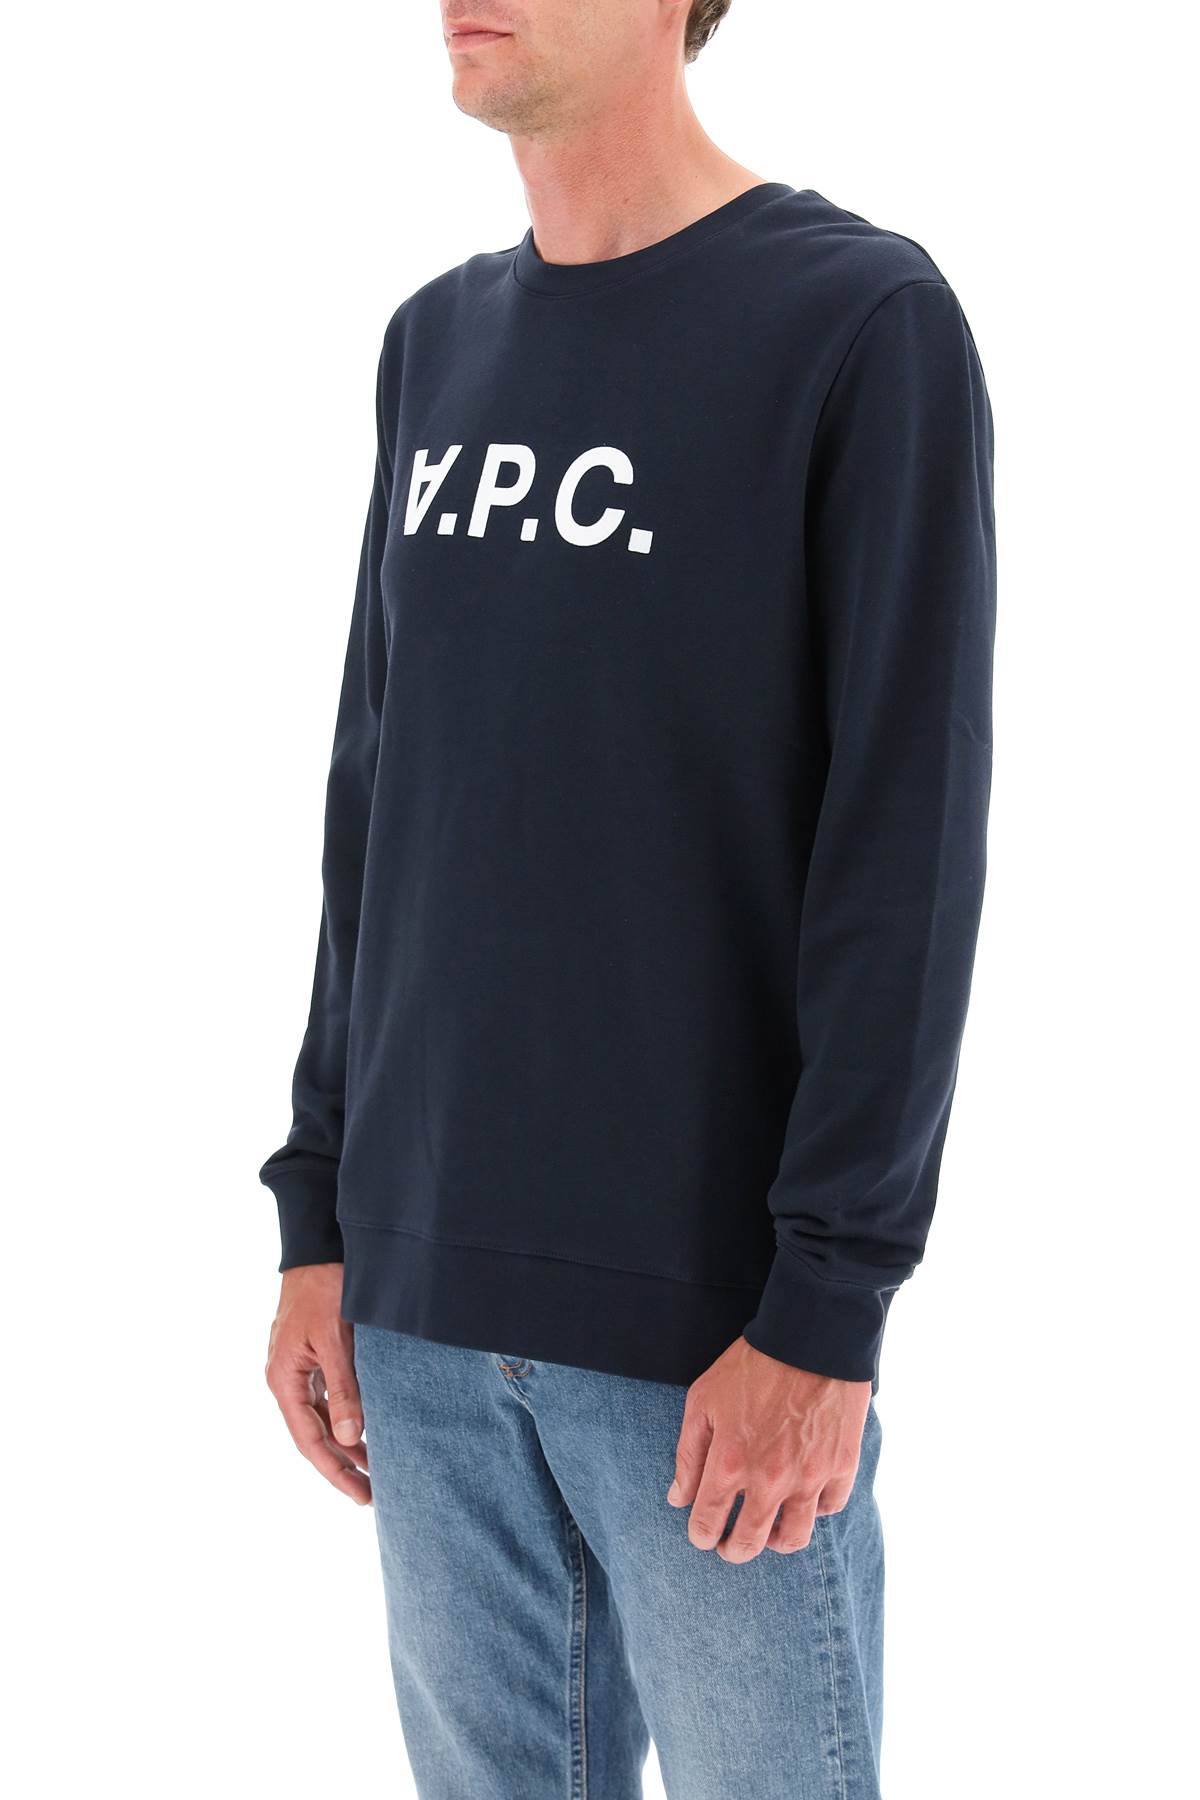 Shop Apc Flock V.p.c. Logo Sweatshirt In Dark Navy (blue)